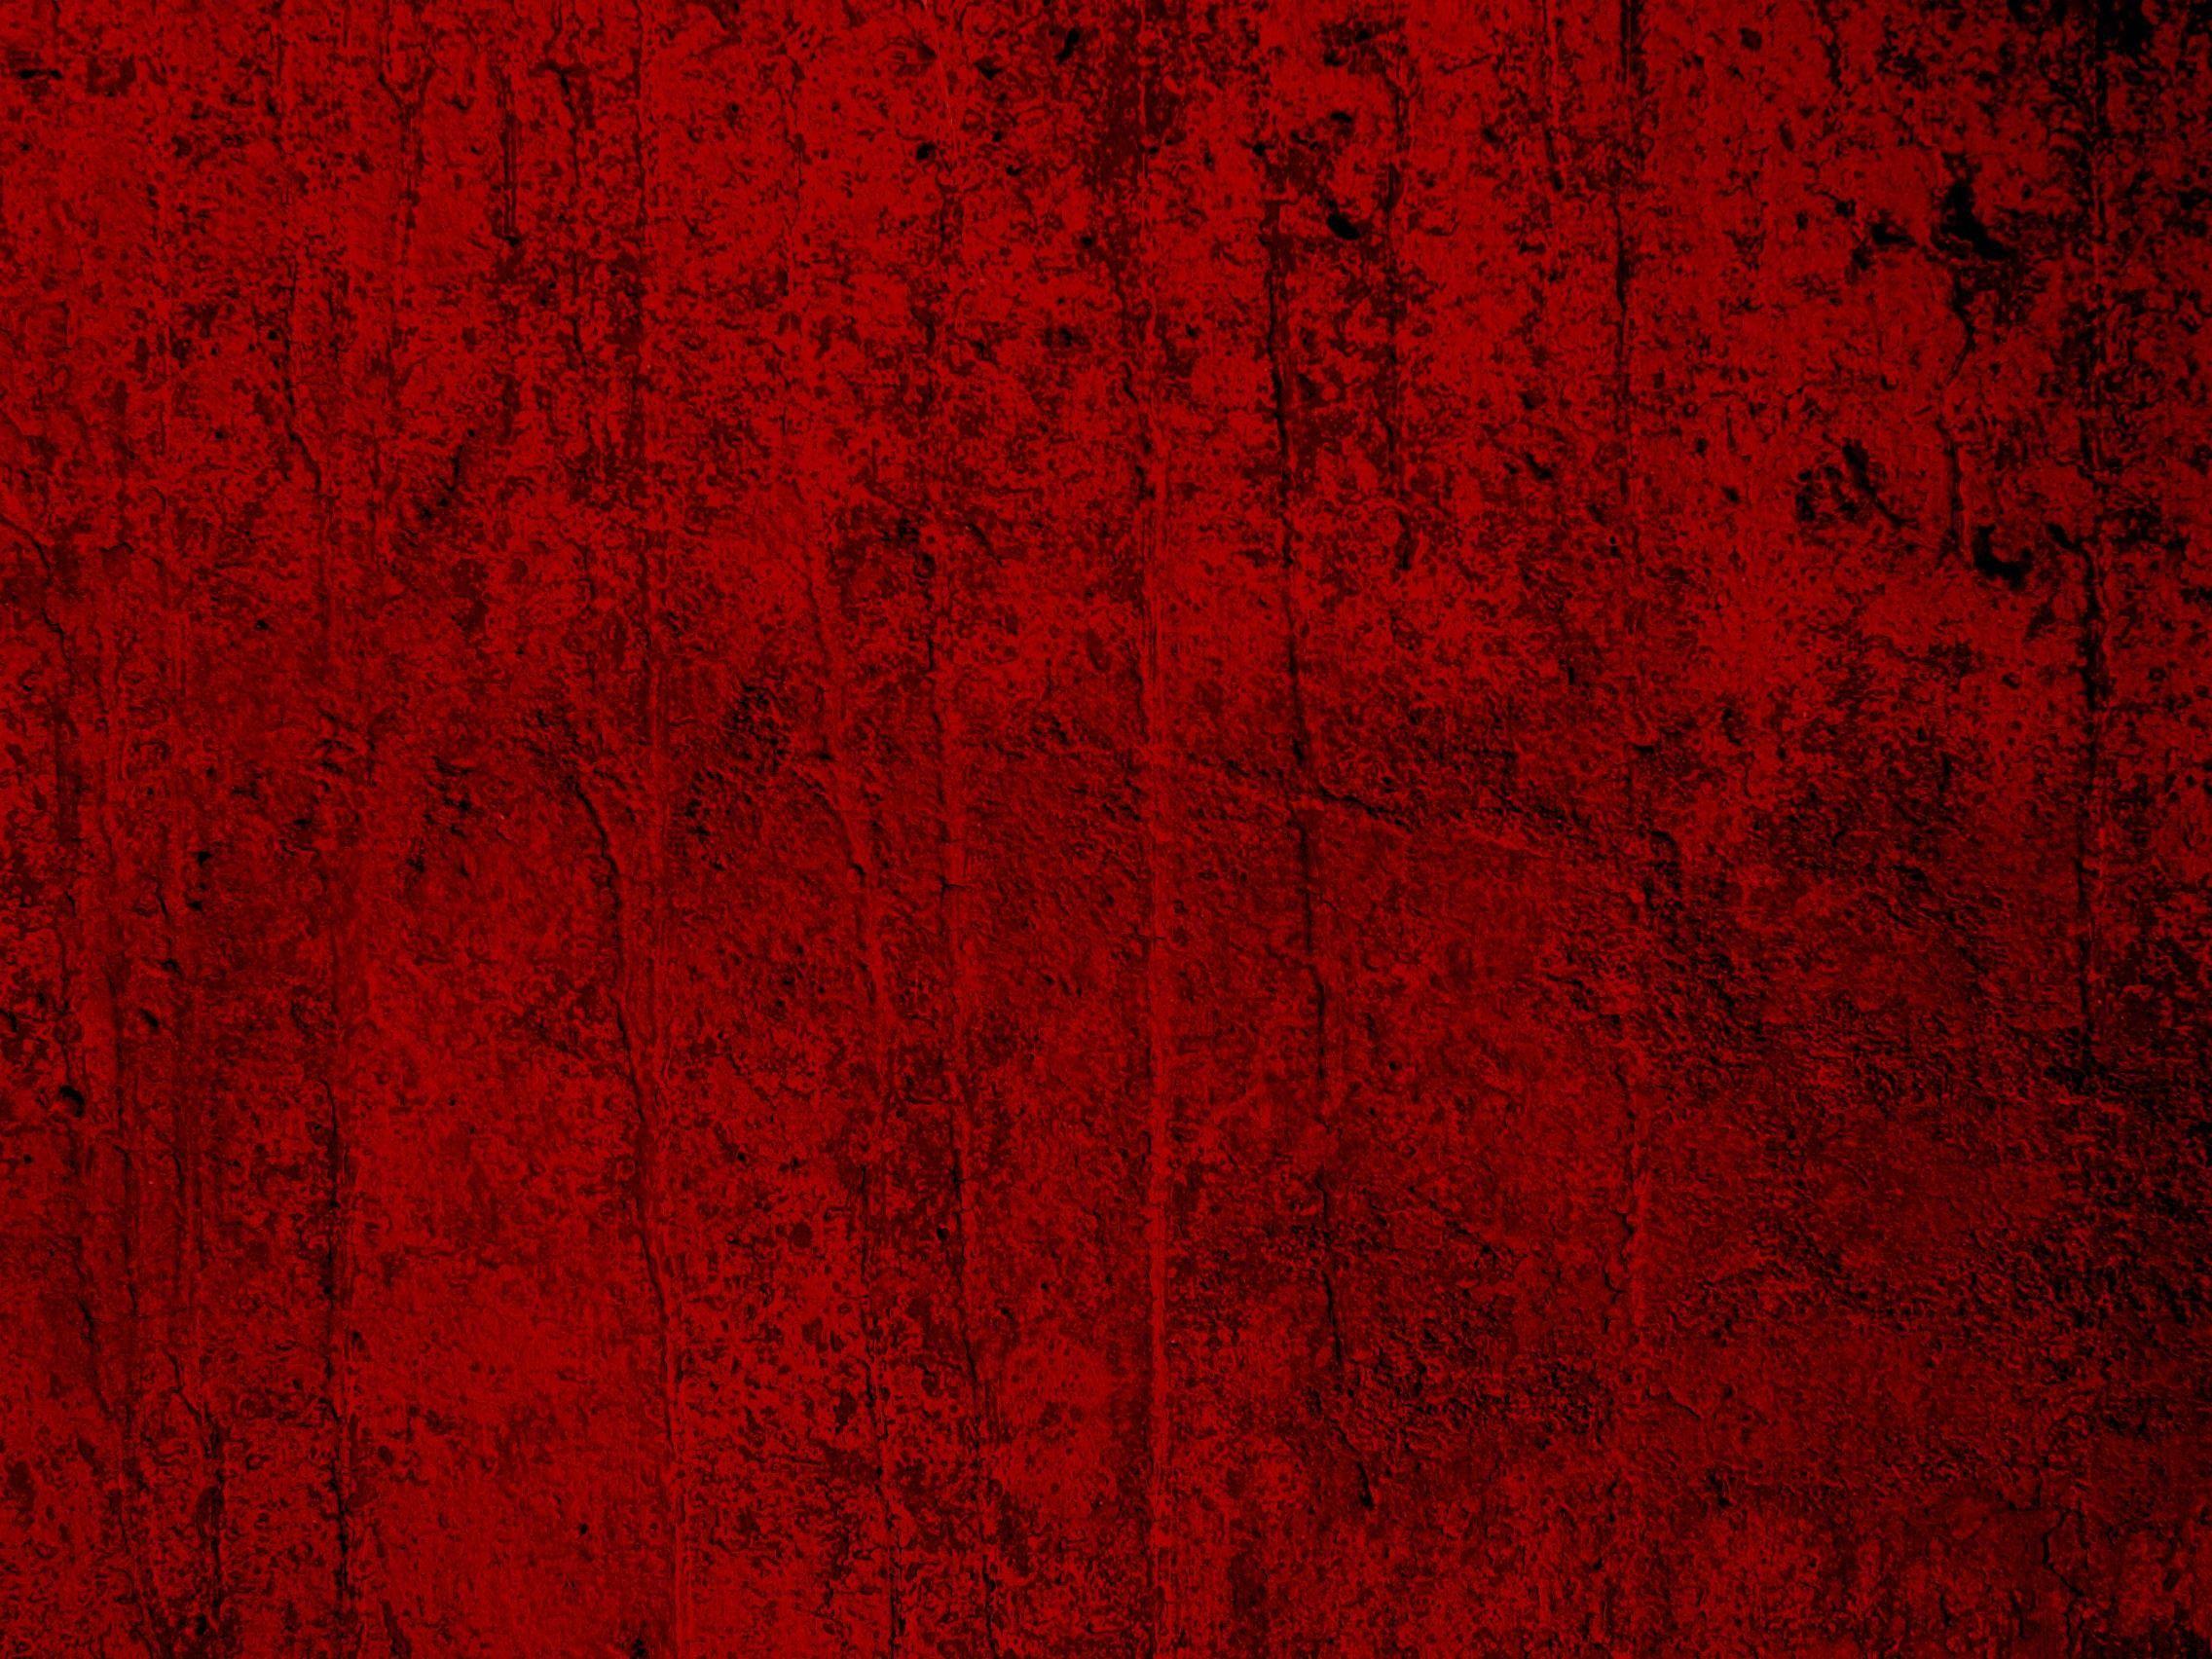 dark red background tumblr